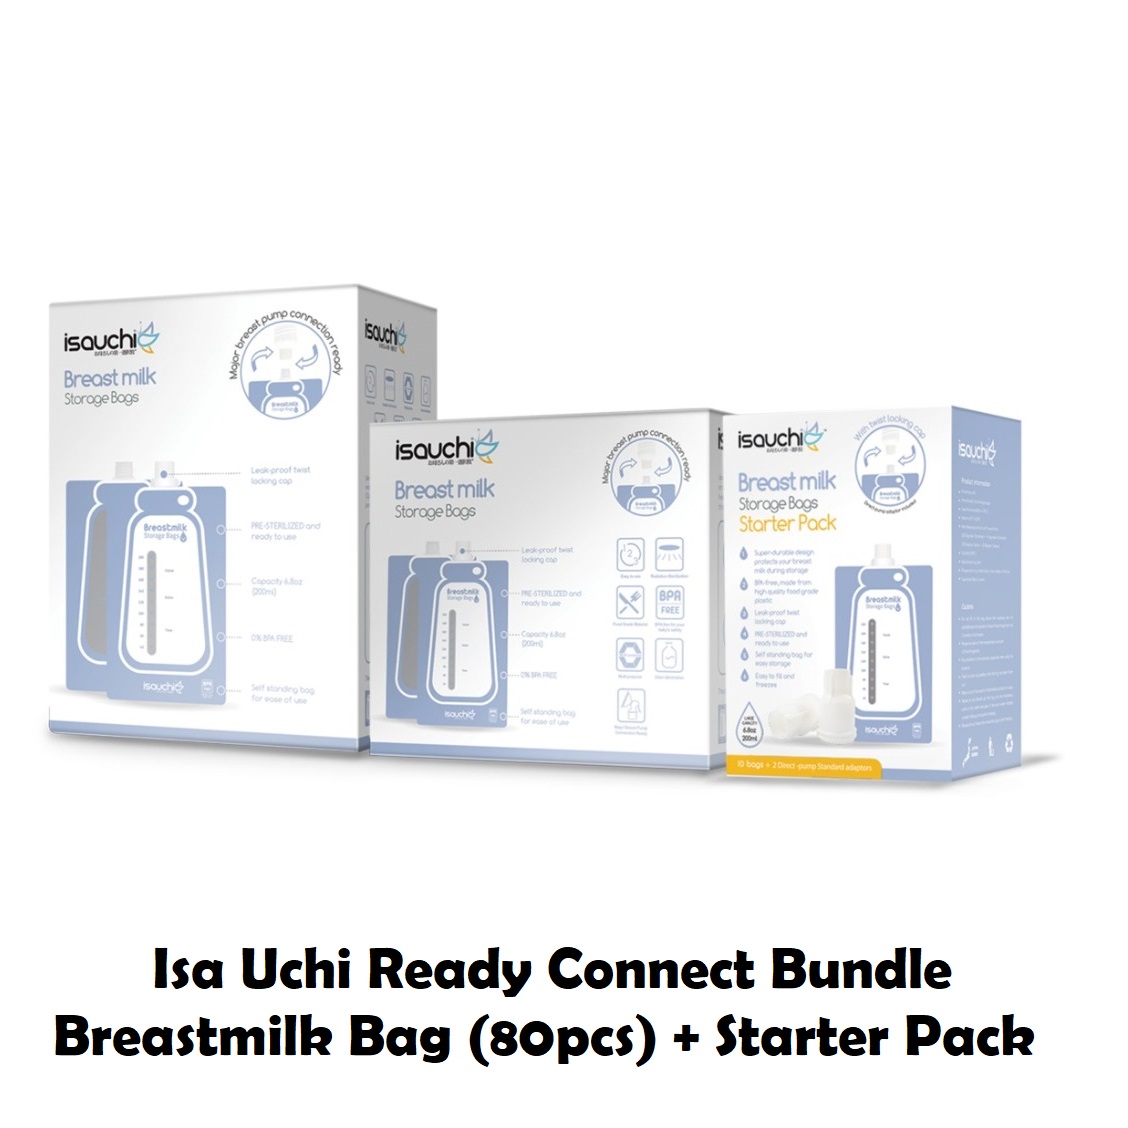 Isa Uchi Ready Connect Breastmilk Bag (80pcs) + Starter Pack Bundle